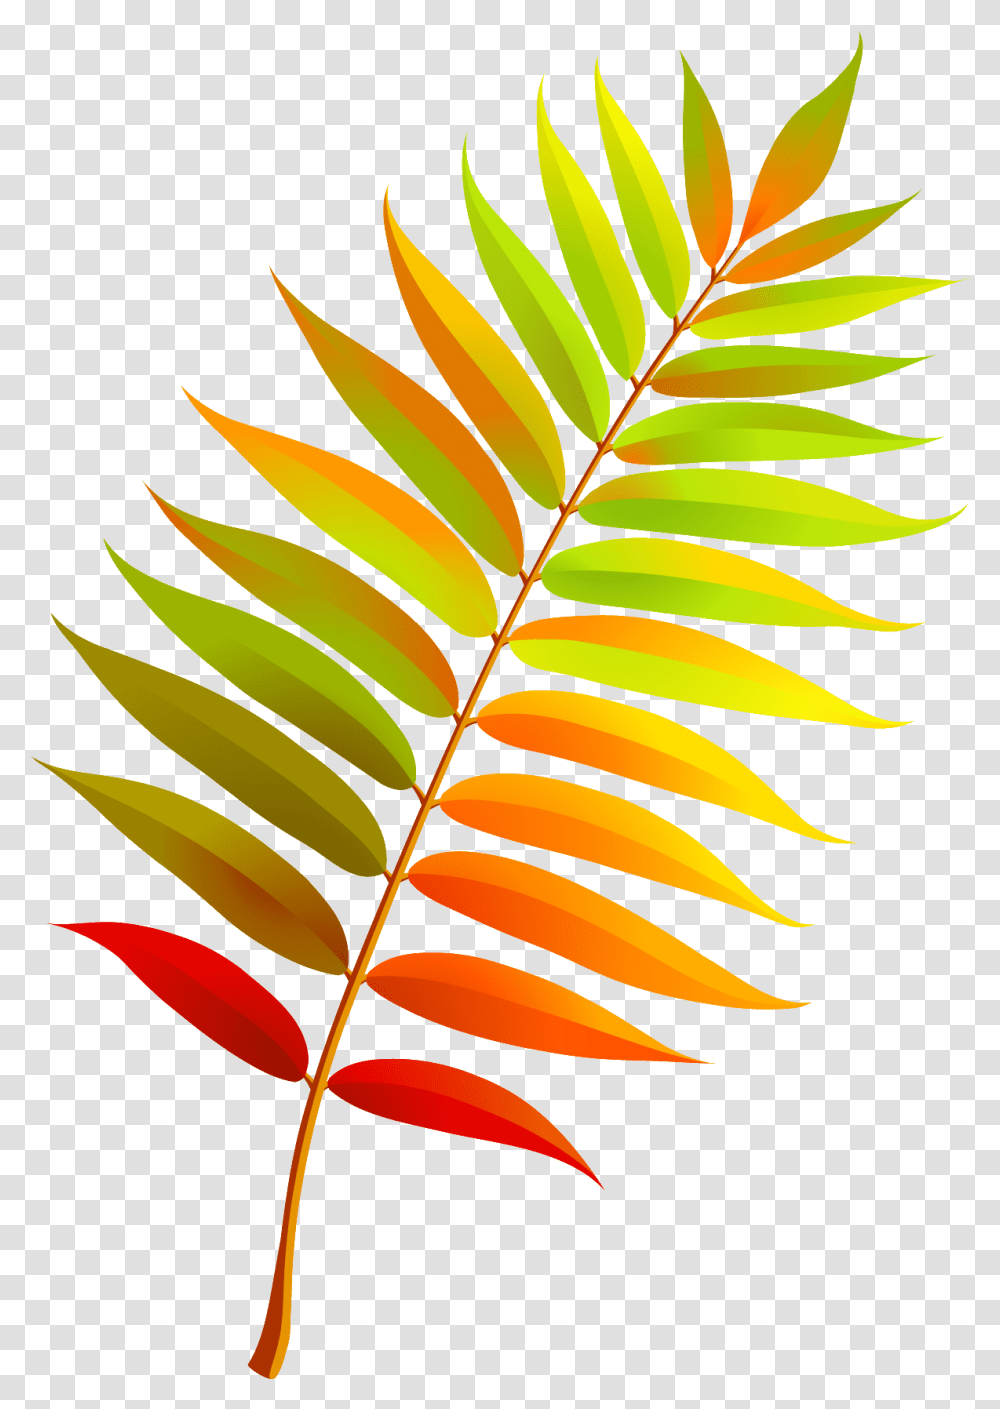 Autumn Leaves Rubrics Stencils Clip Art Flower Bonitas Hojas De Imagenes, Leaf, Plant, Green, Fern Transparent Png